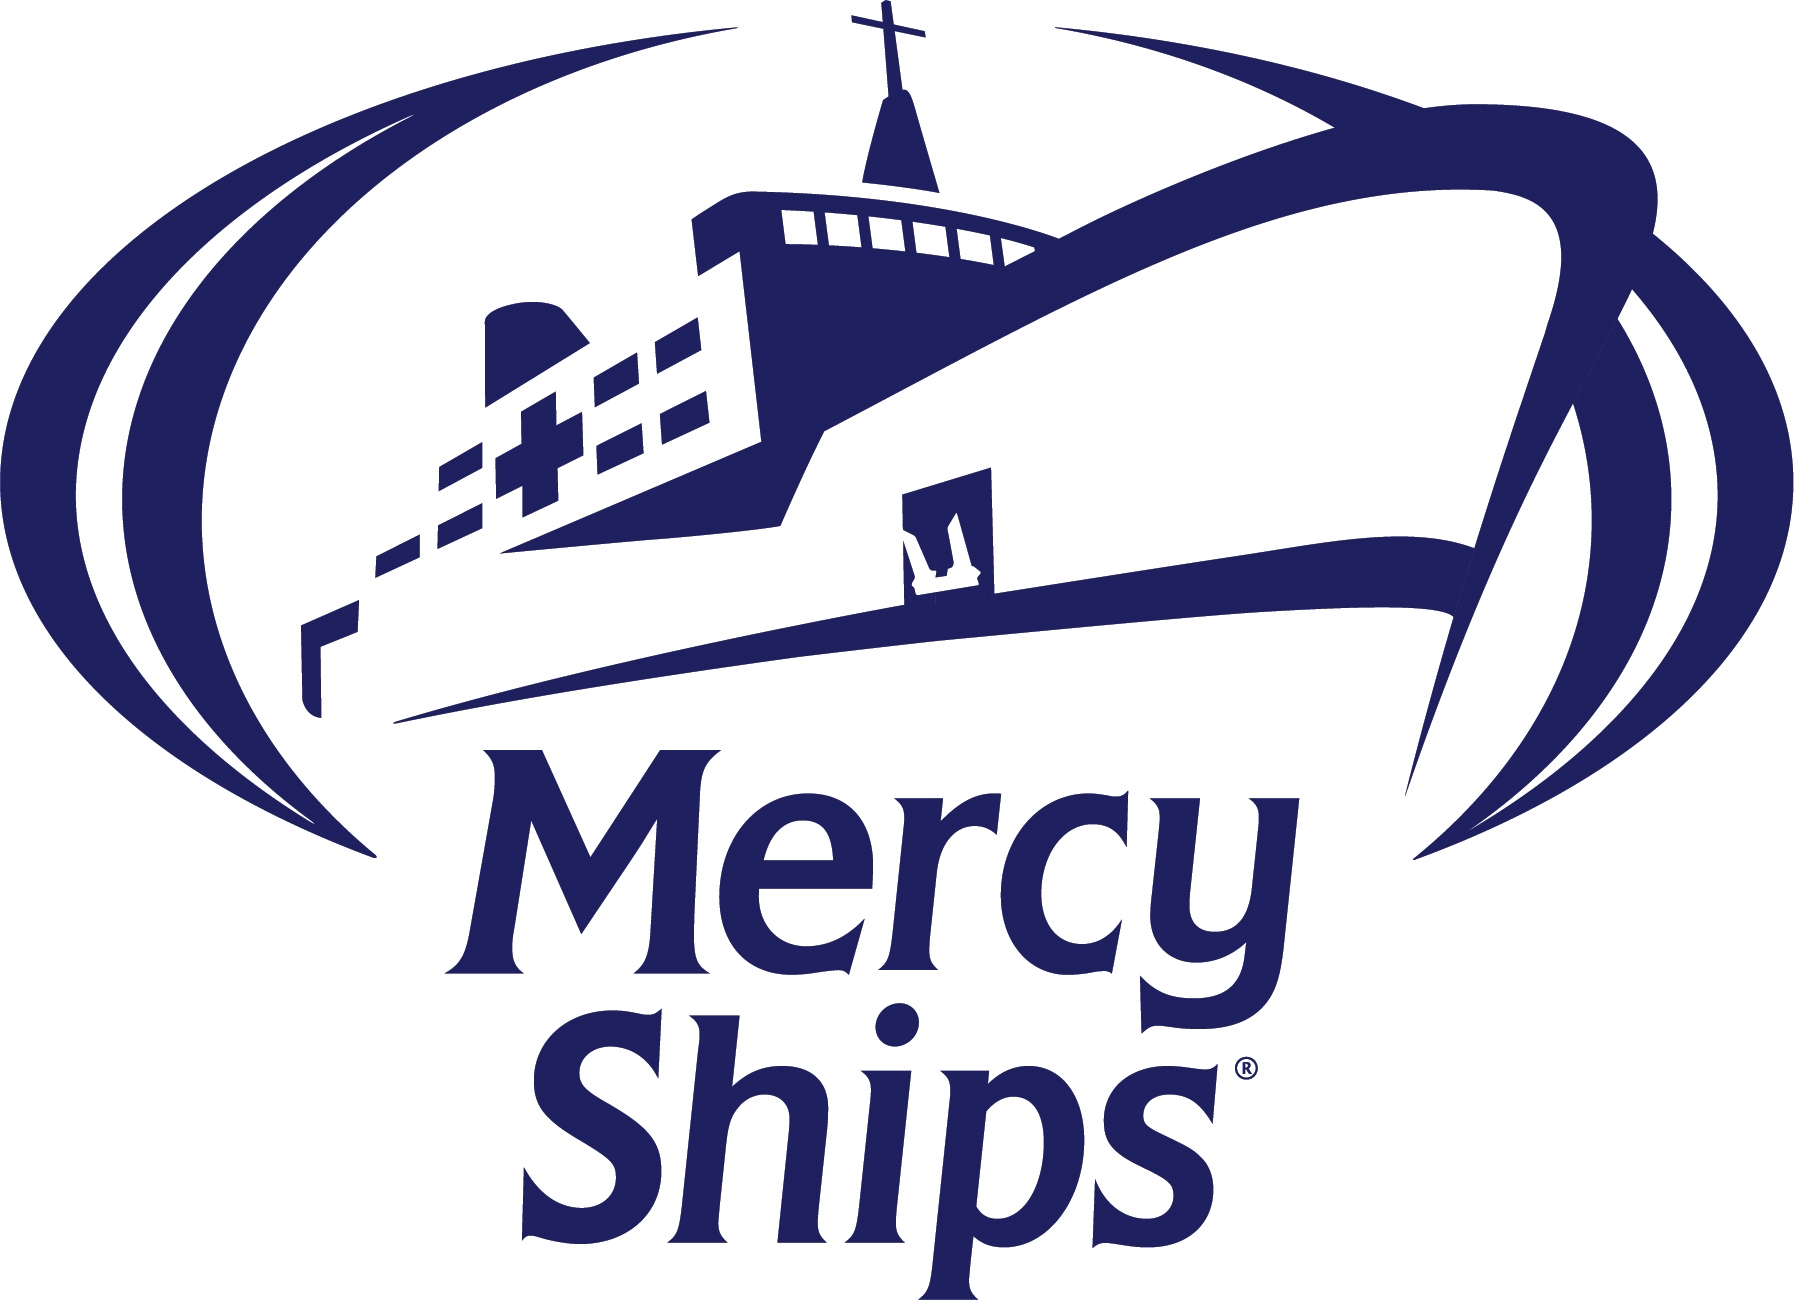 Mercy Ships annonce son deuxième navire-hôpital : le Global Mercy